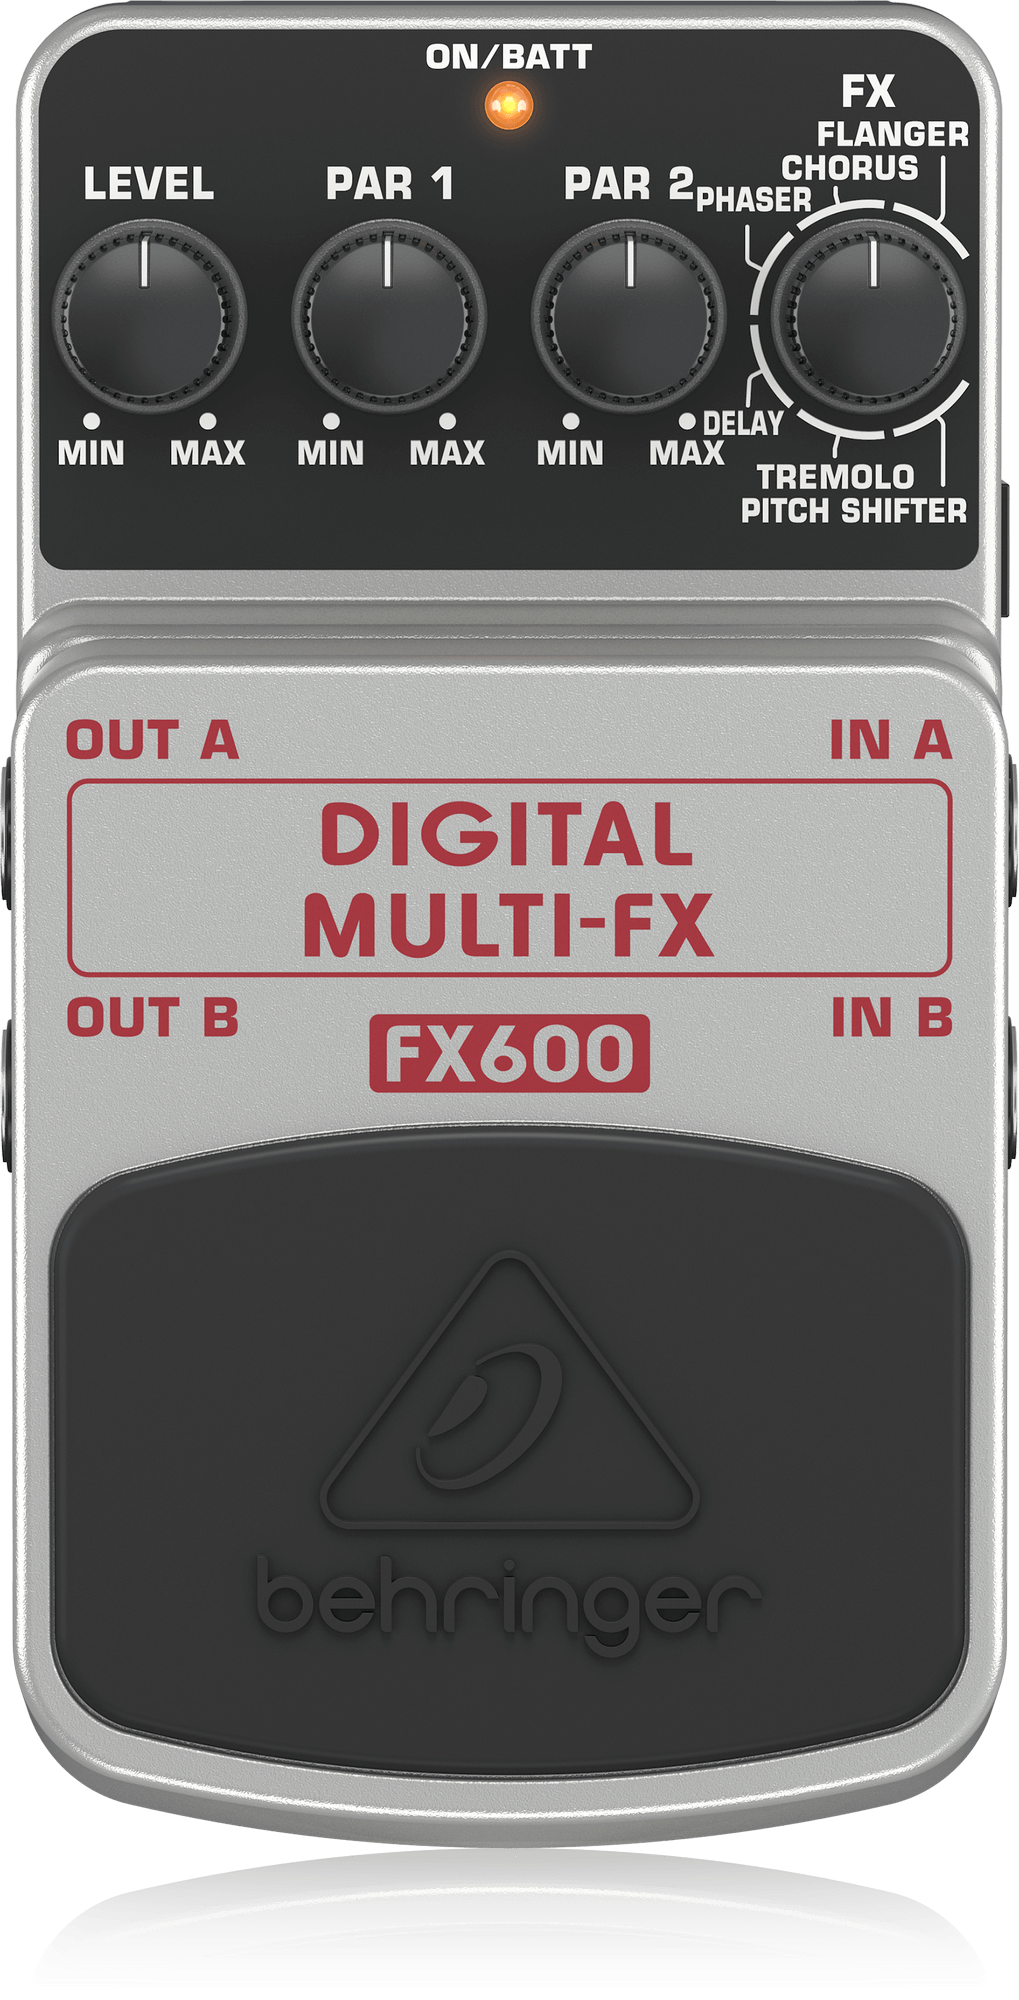 DIGITAL MULTI-FX FX600